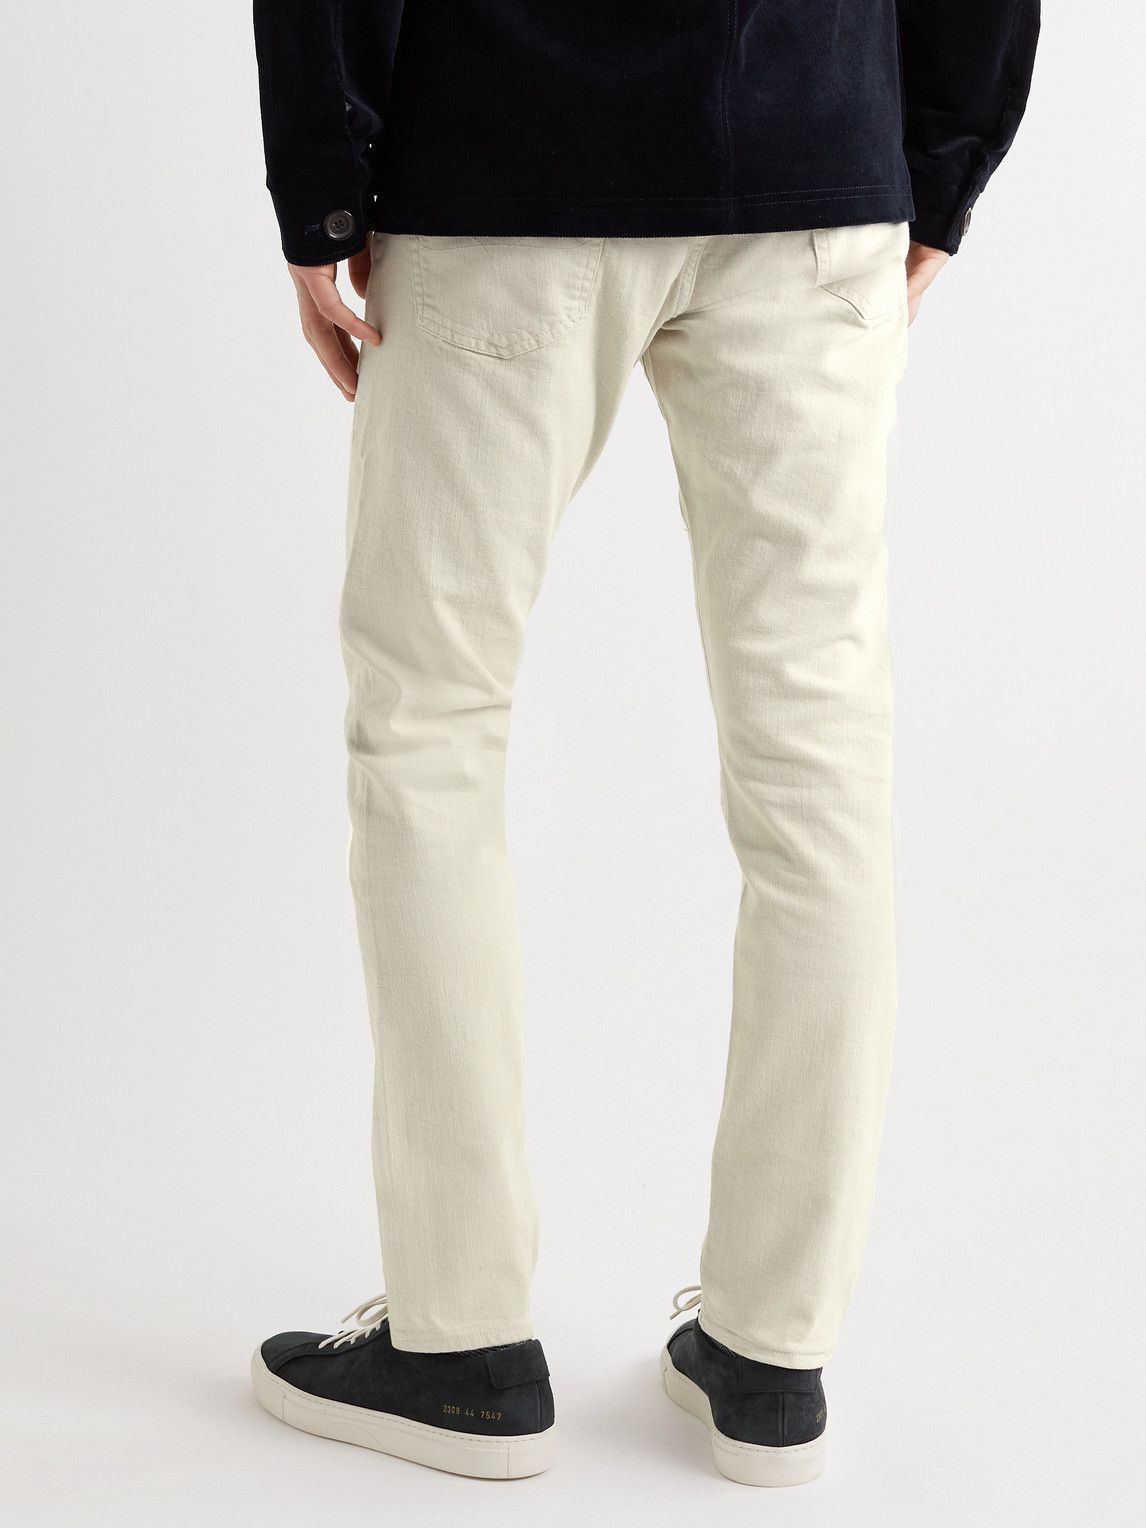 Polo Ralph Lauren - Sullivan Slim-Fit Jeans - Neutrals